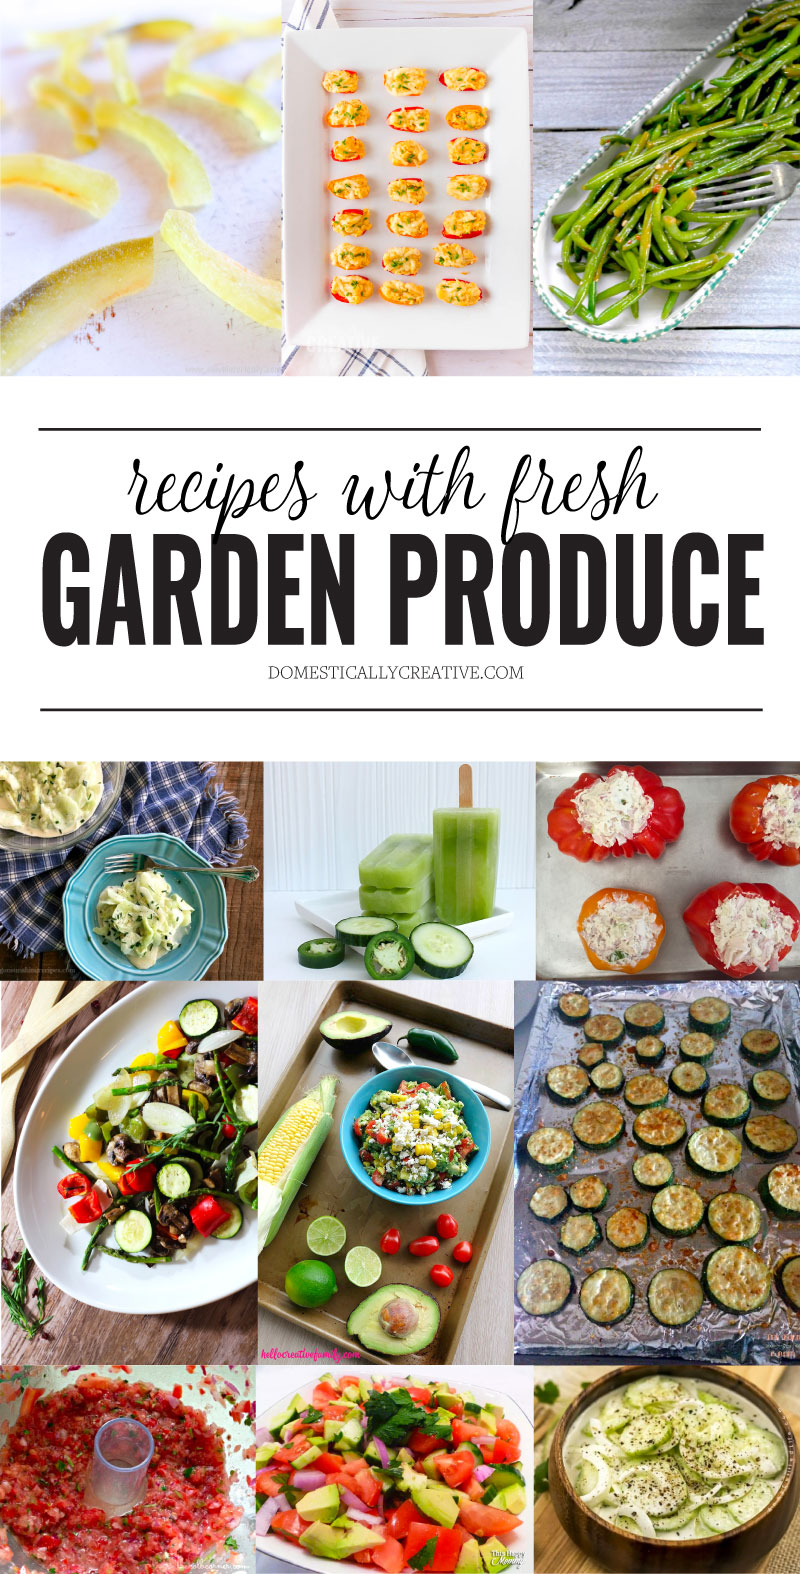 Recipes that use fresh garden produce